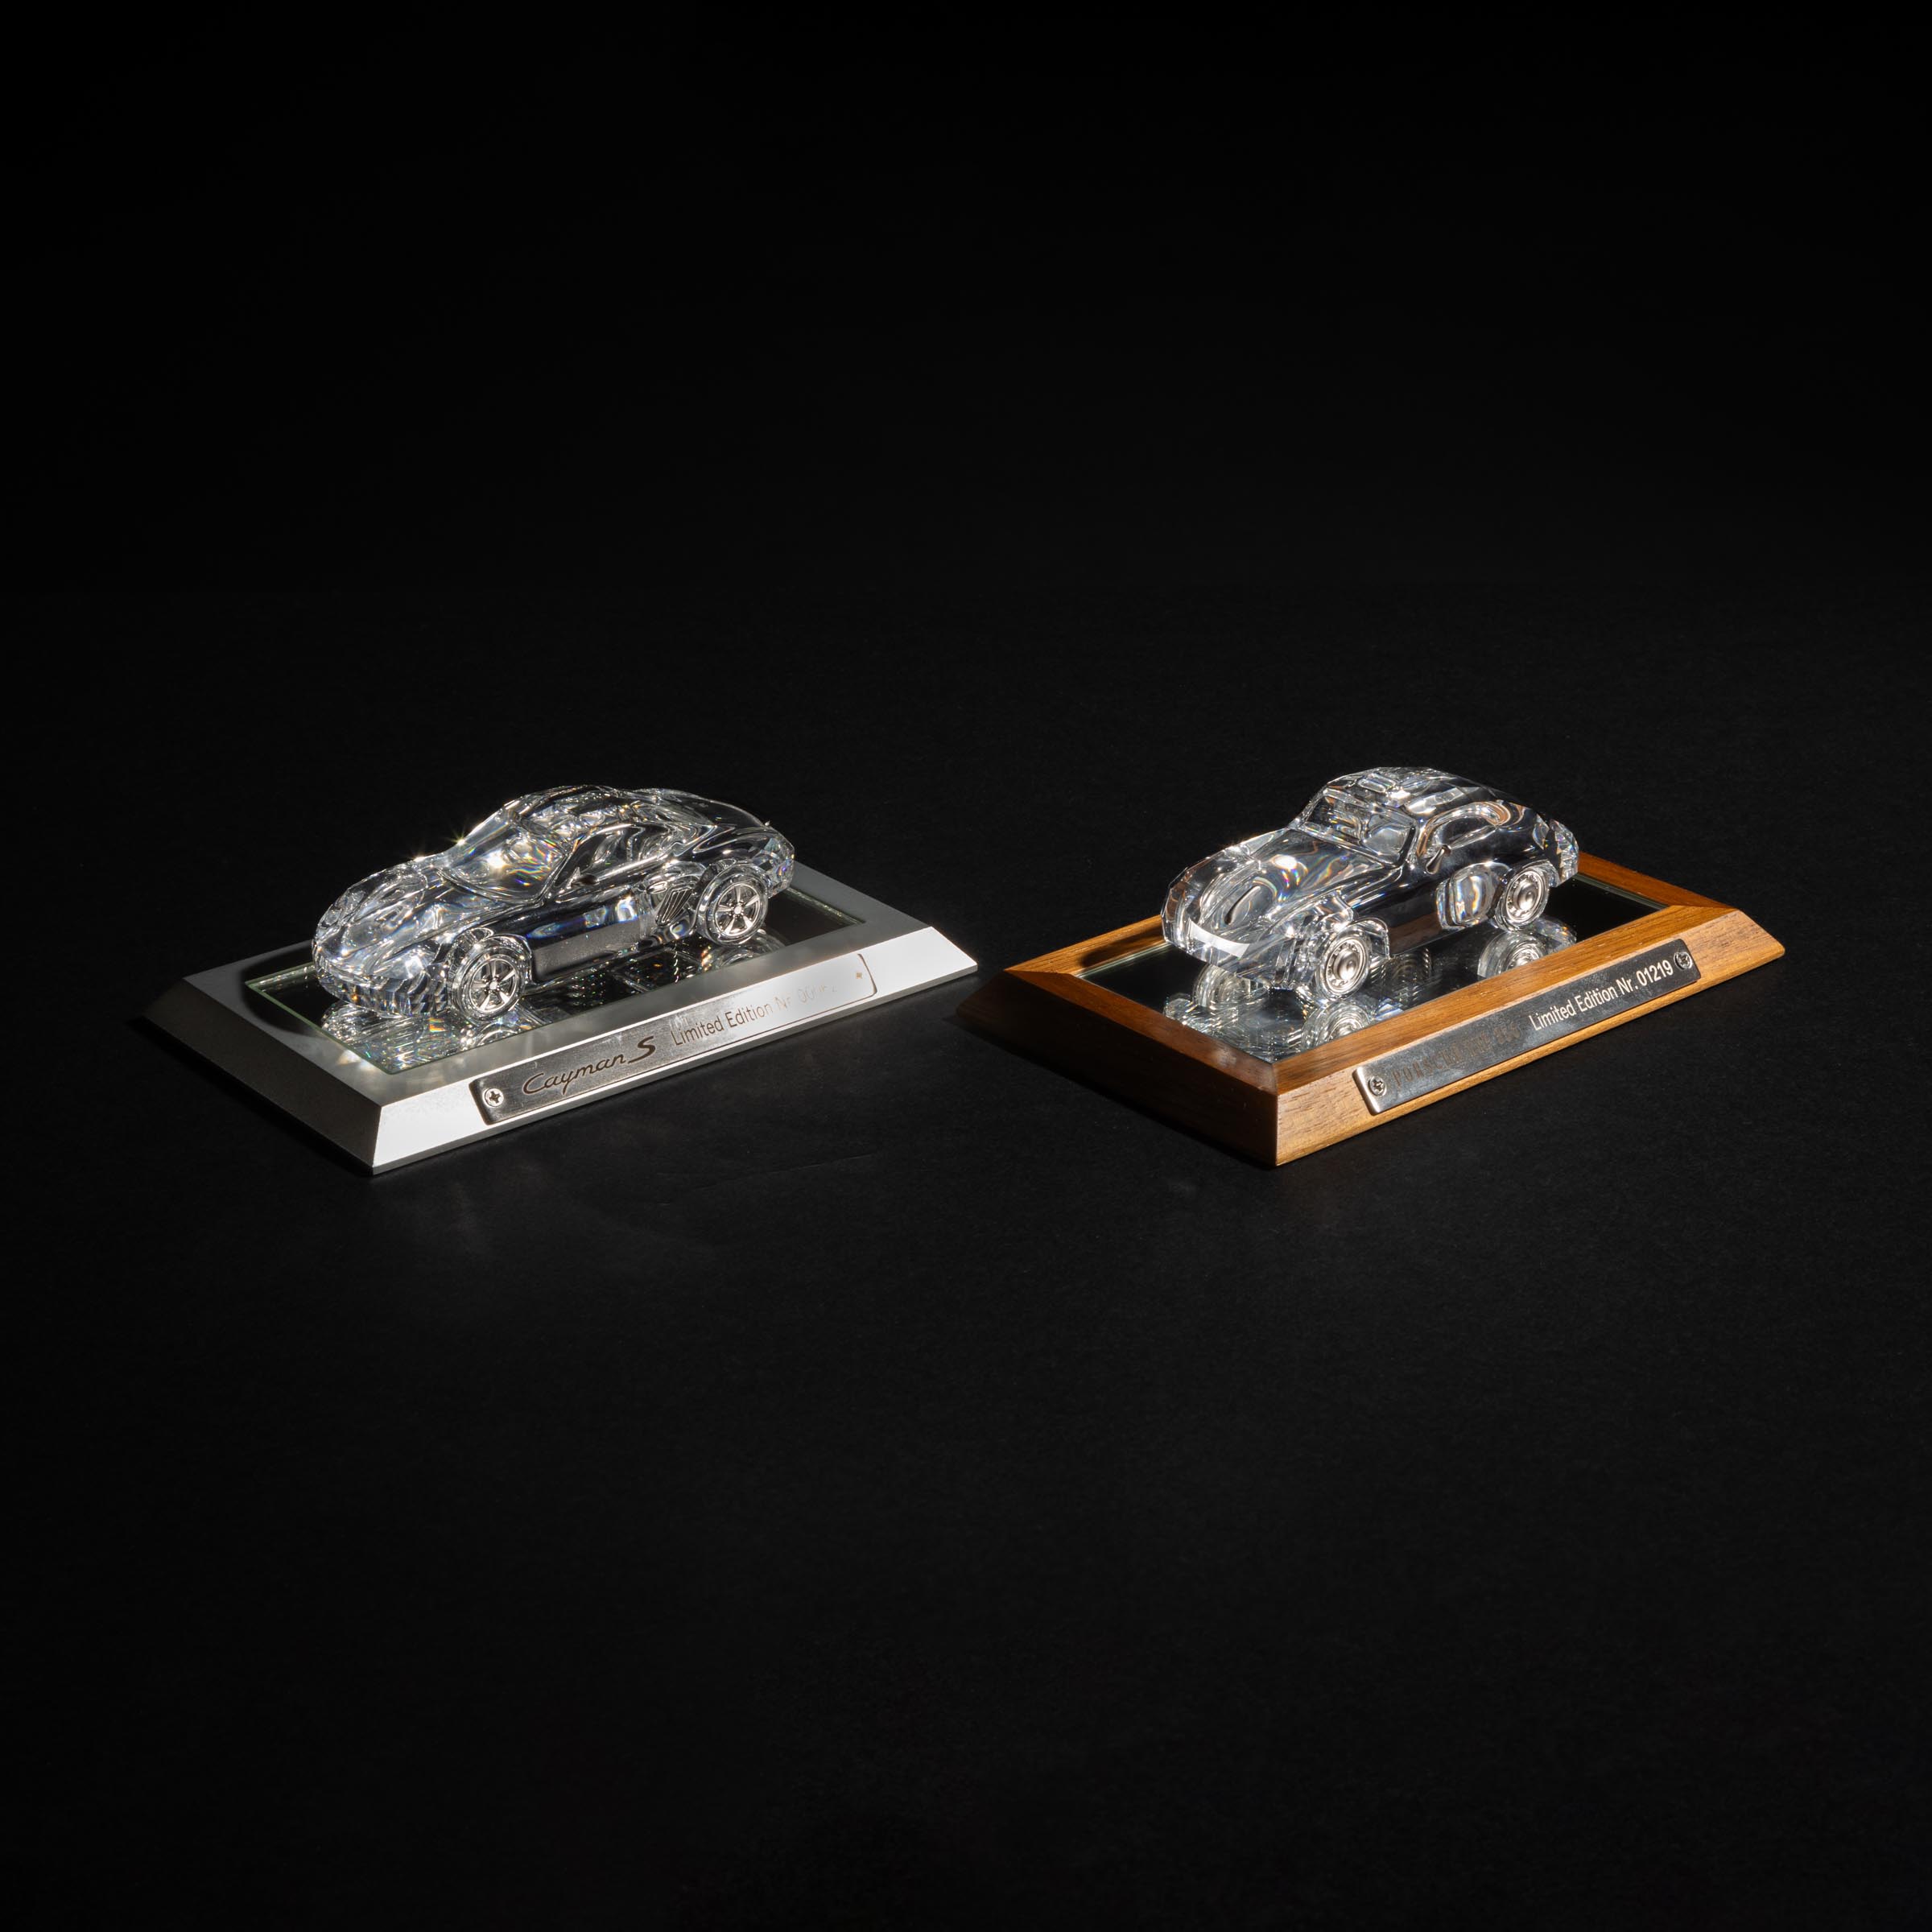 Two Swarovski Crystal Limited Edition